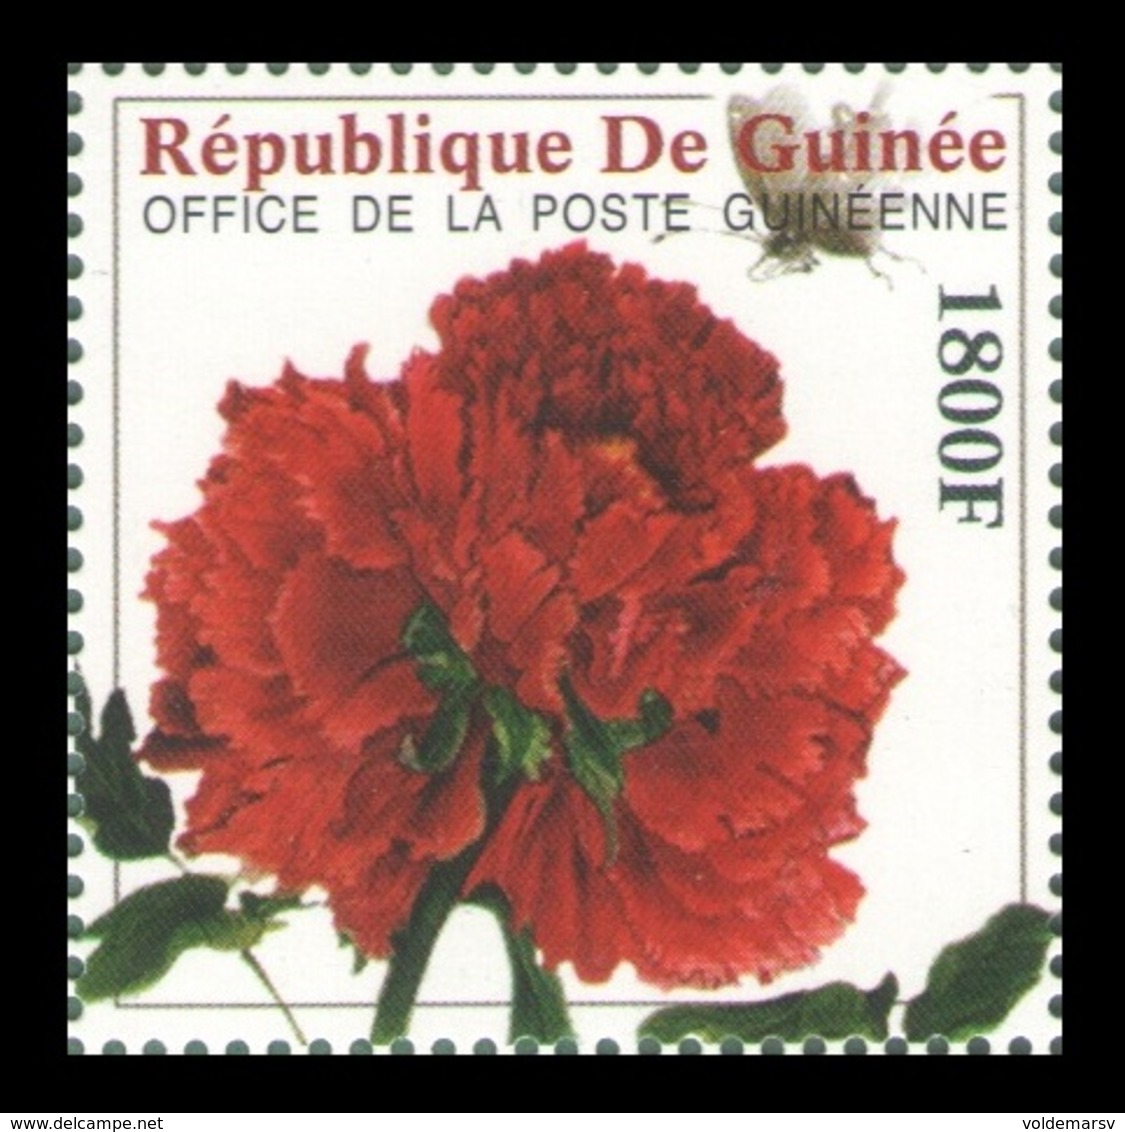 Guinea 2009 Mih. 6490 Flora. Flowers. Peony MNH ** - Guinee (1958-...)